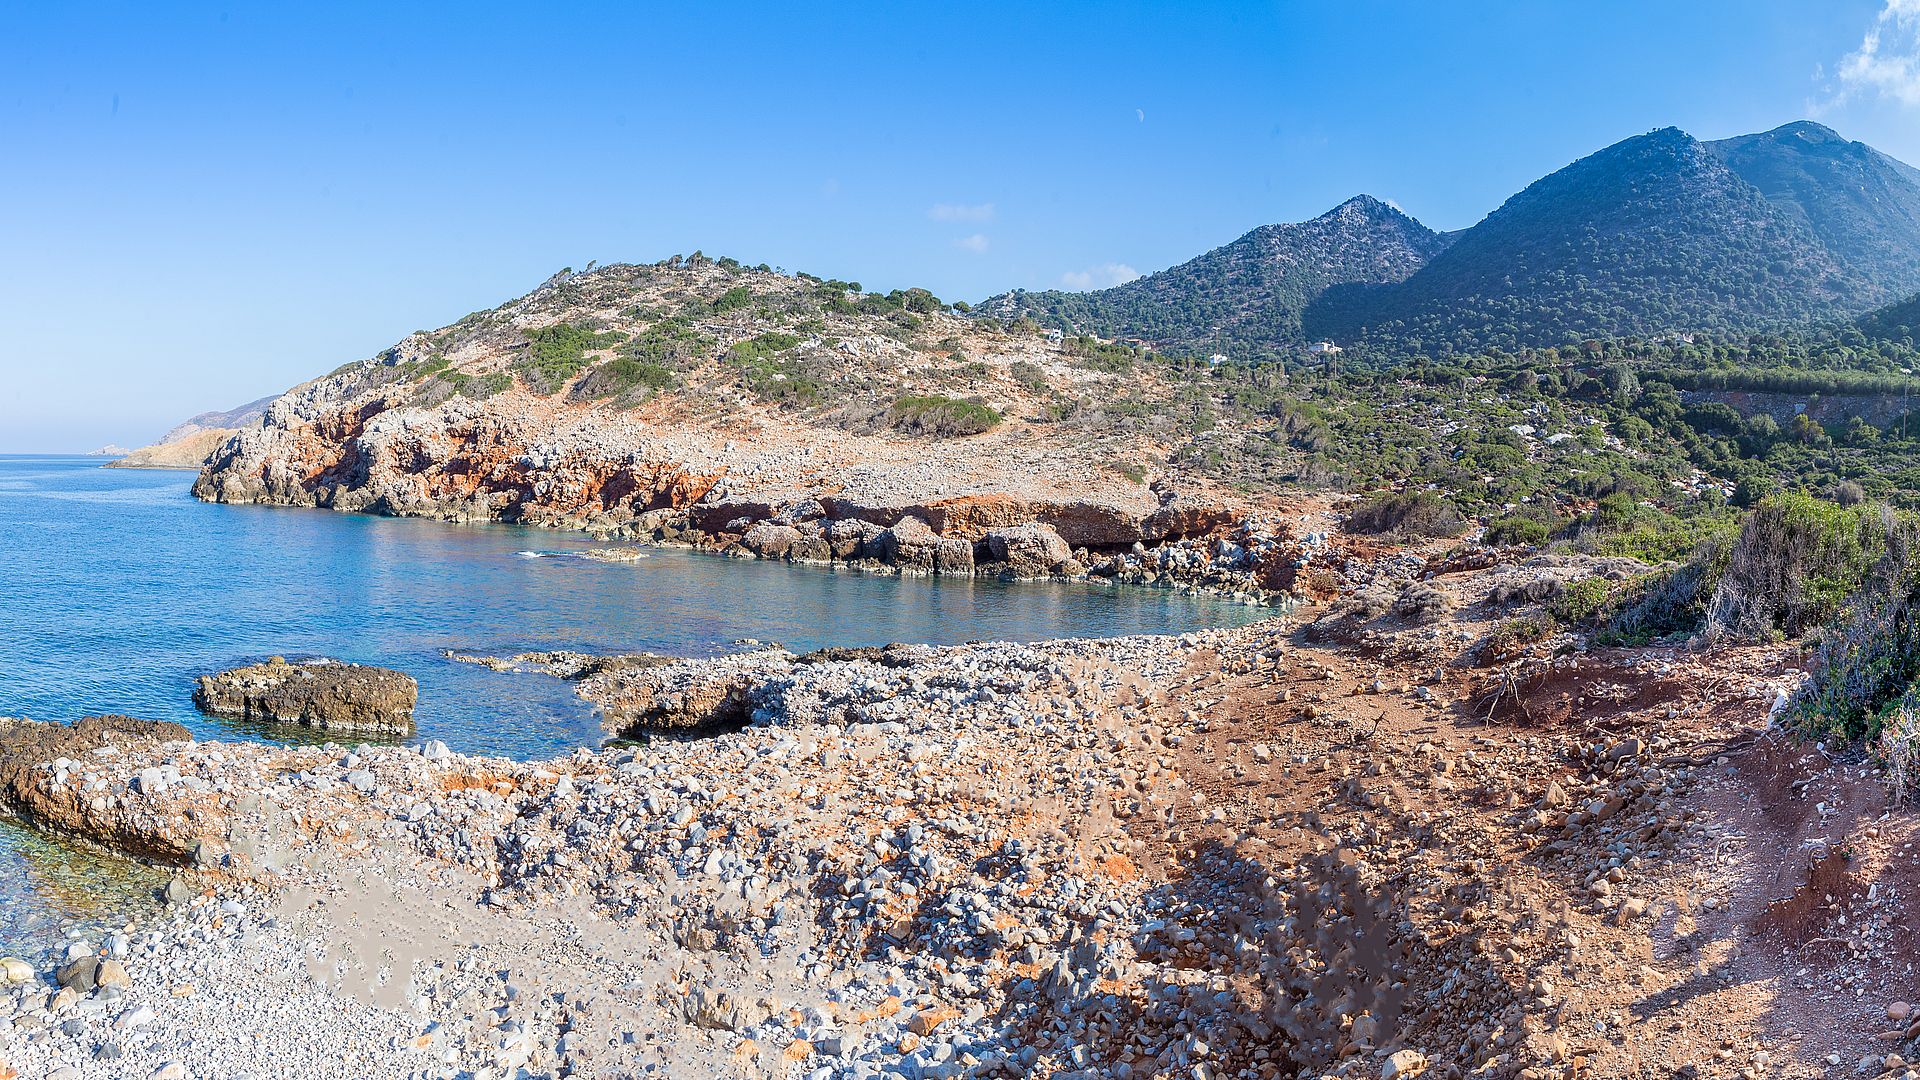 Uniek perceel van 70 hectare met 3 stranden te koop in centraal Kreta